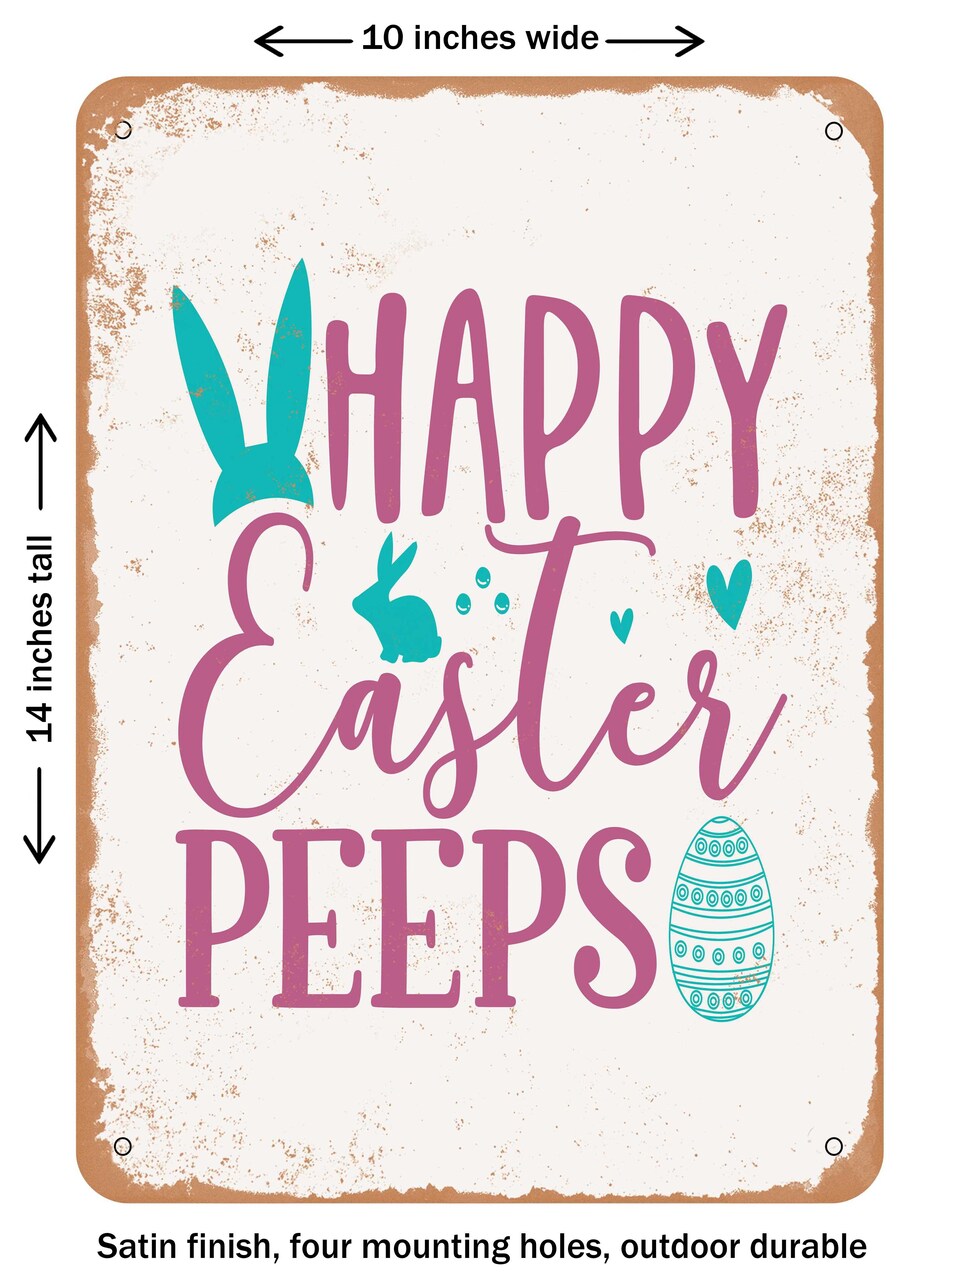 DECORATIVE METAL SIGN - Happy Easter Peeps 2  - Vintage Rusty Look